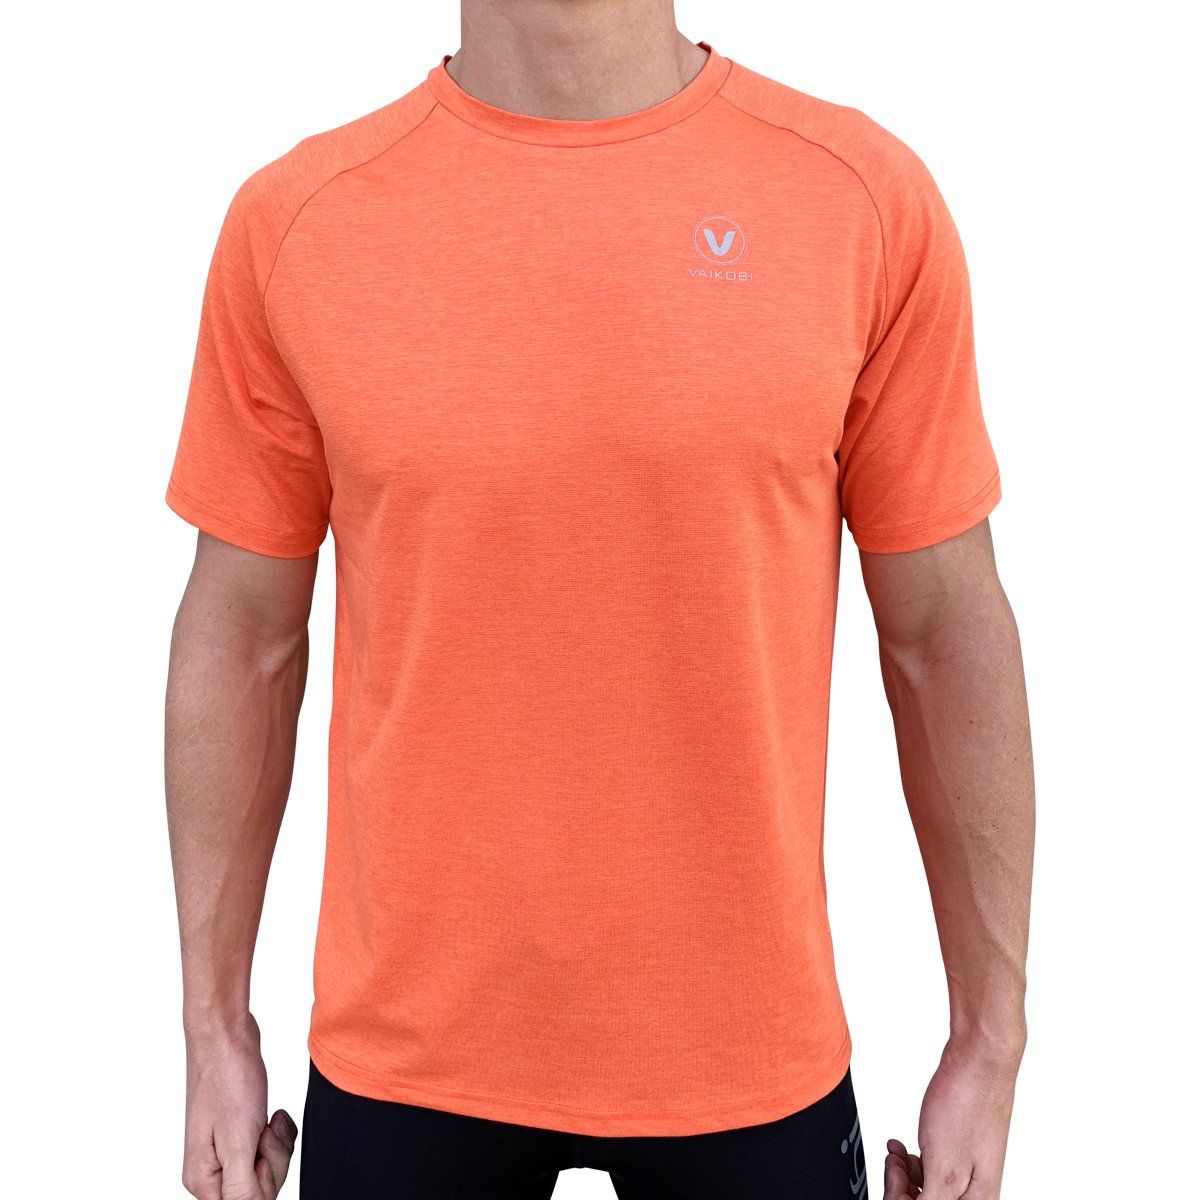 Vaikobi UV Performance Tech T-Shirt, Men's